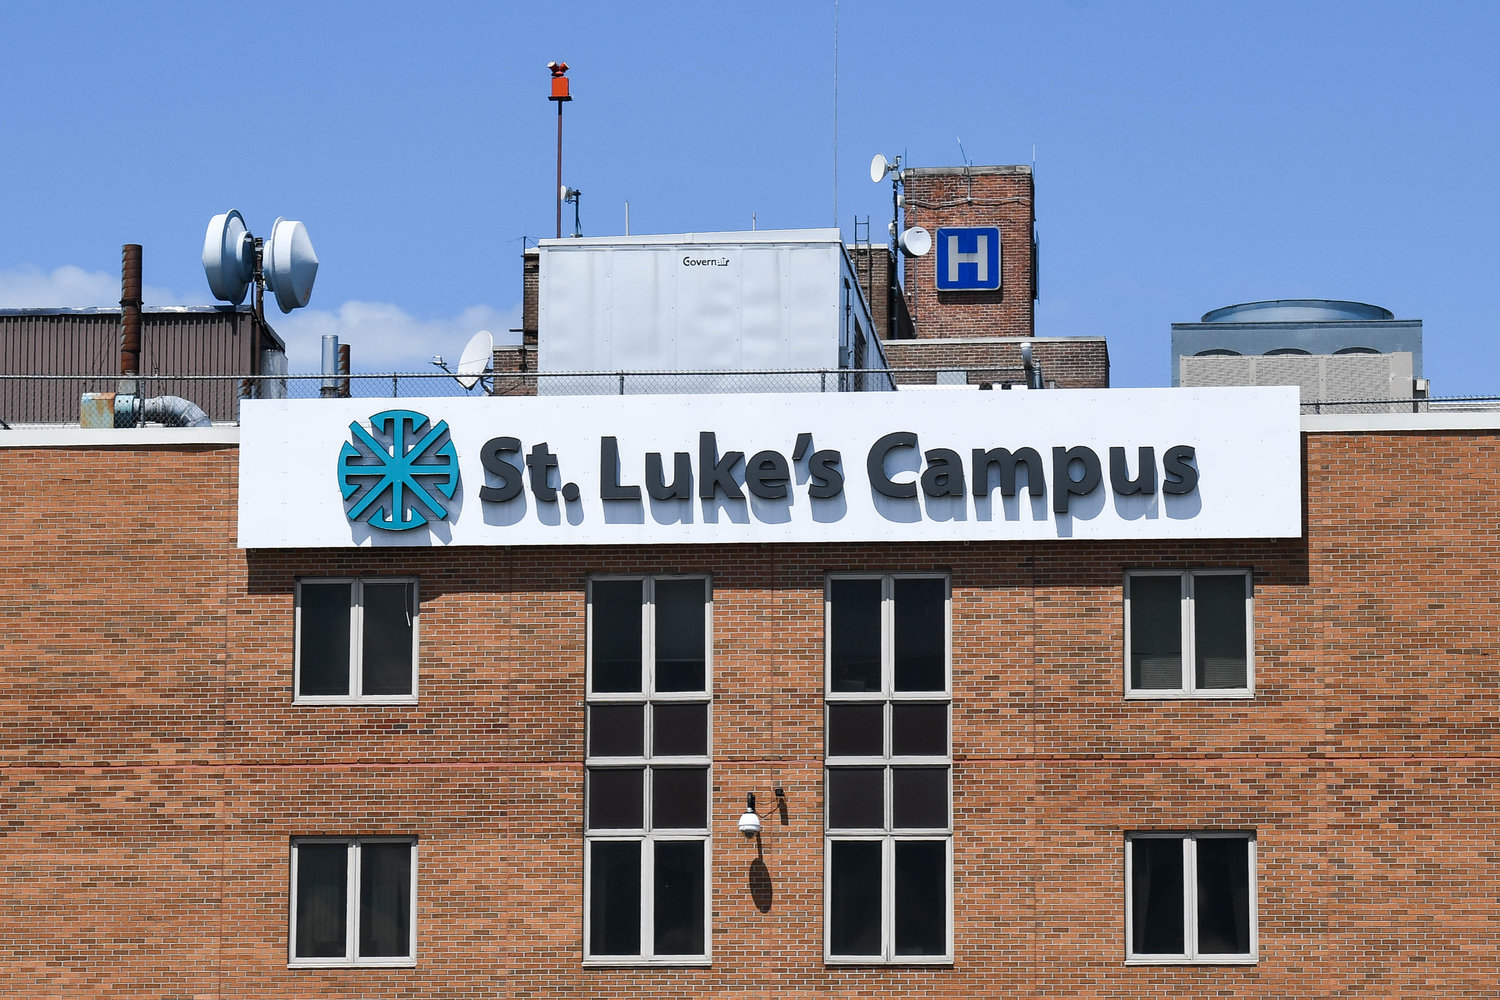 St. Luke's Campus in Utica.